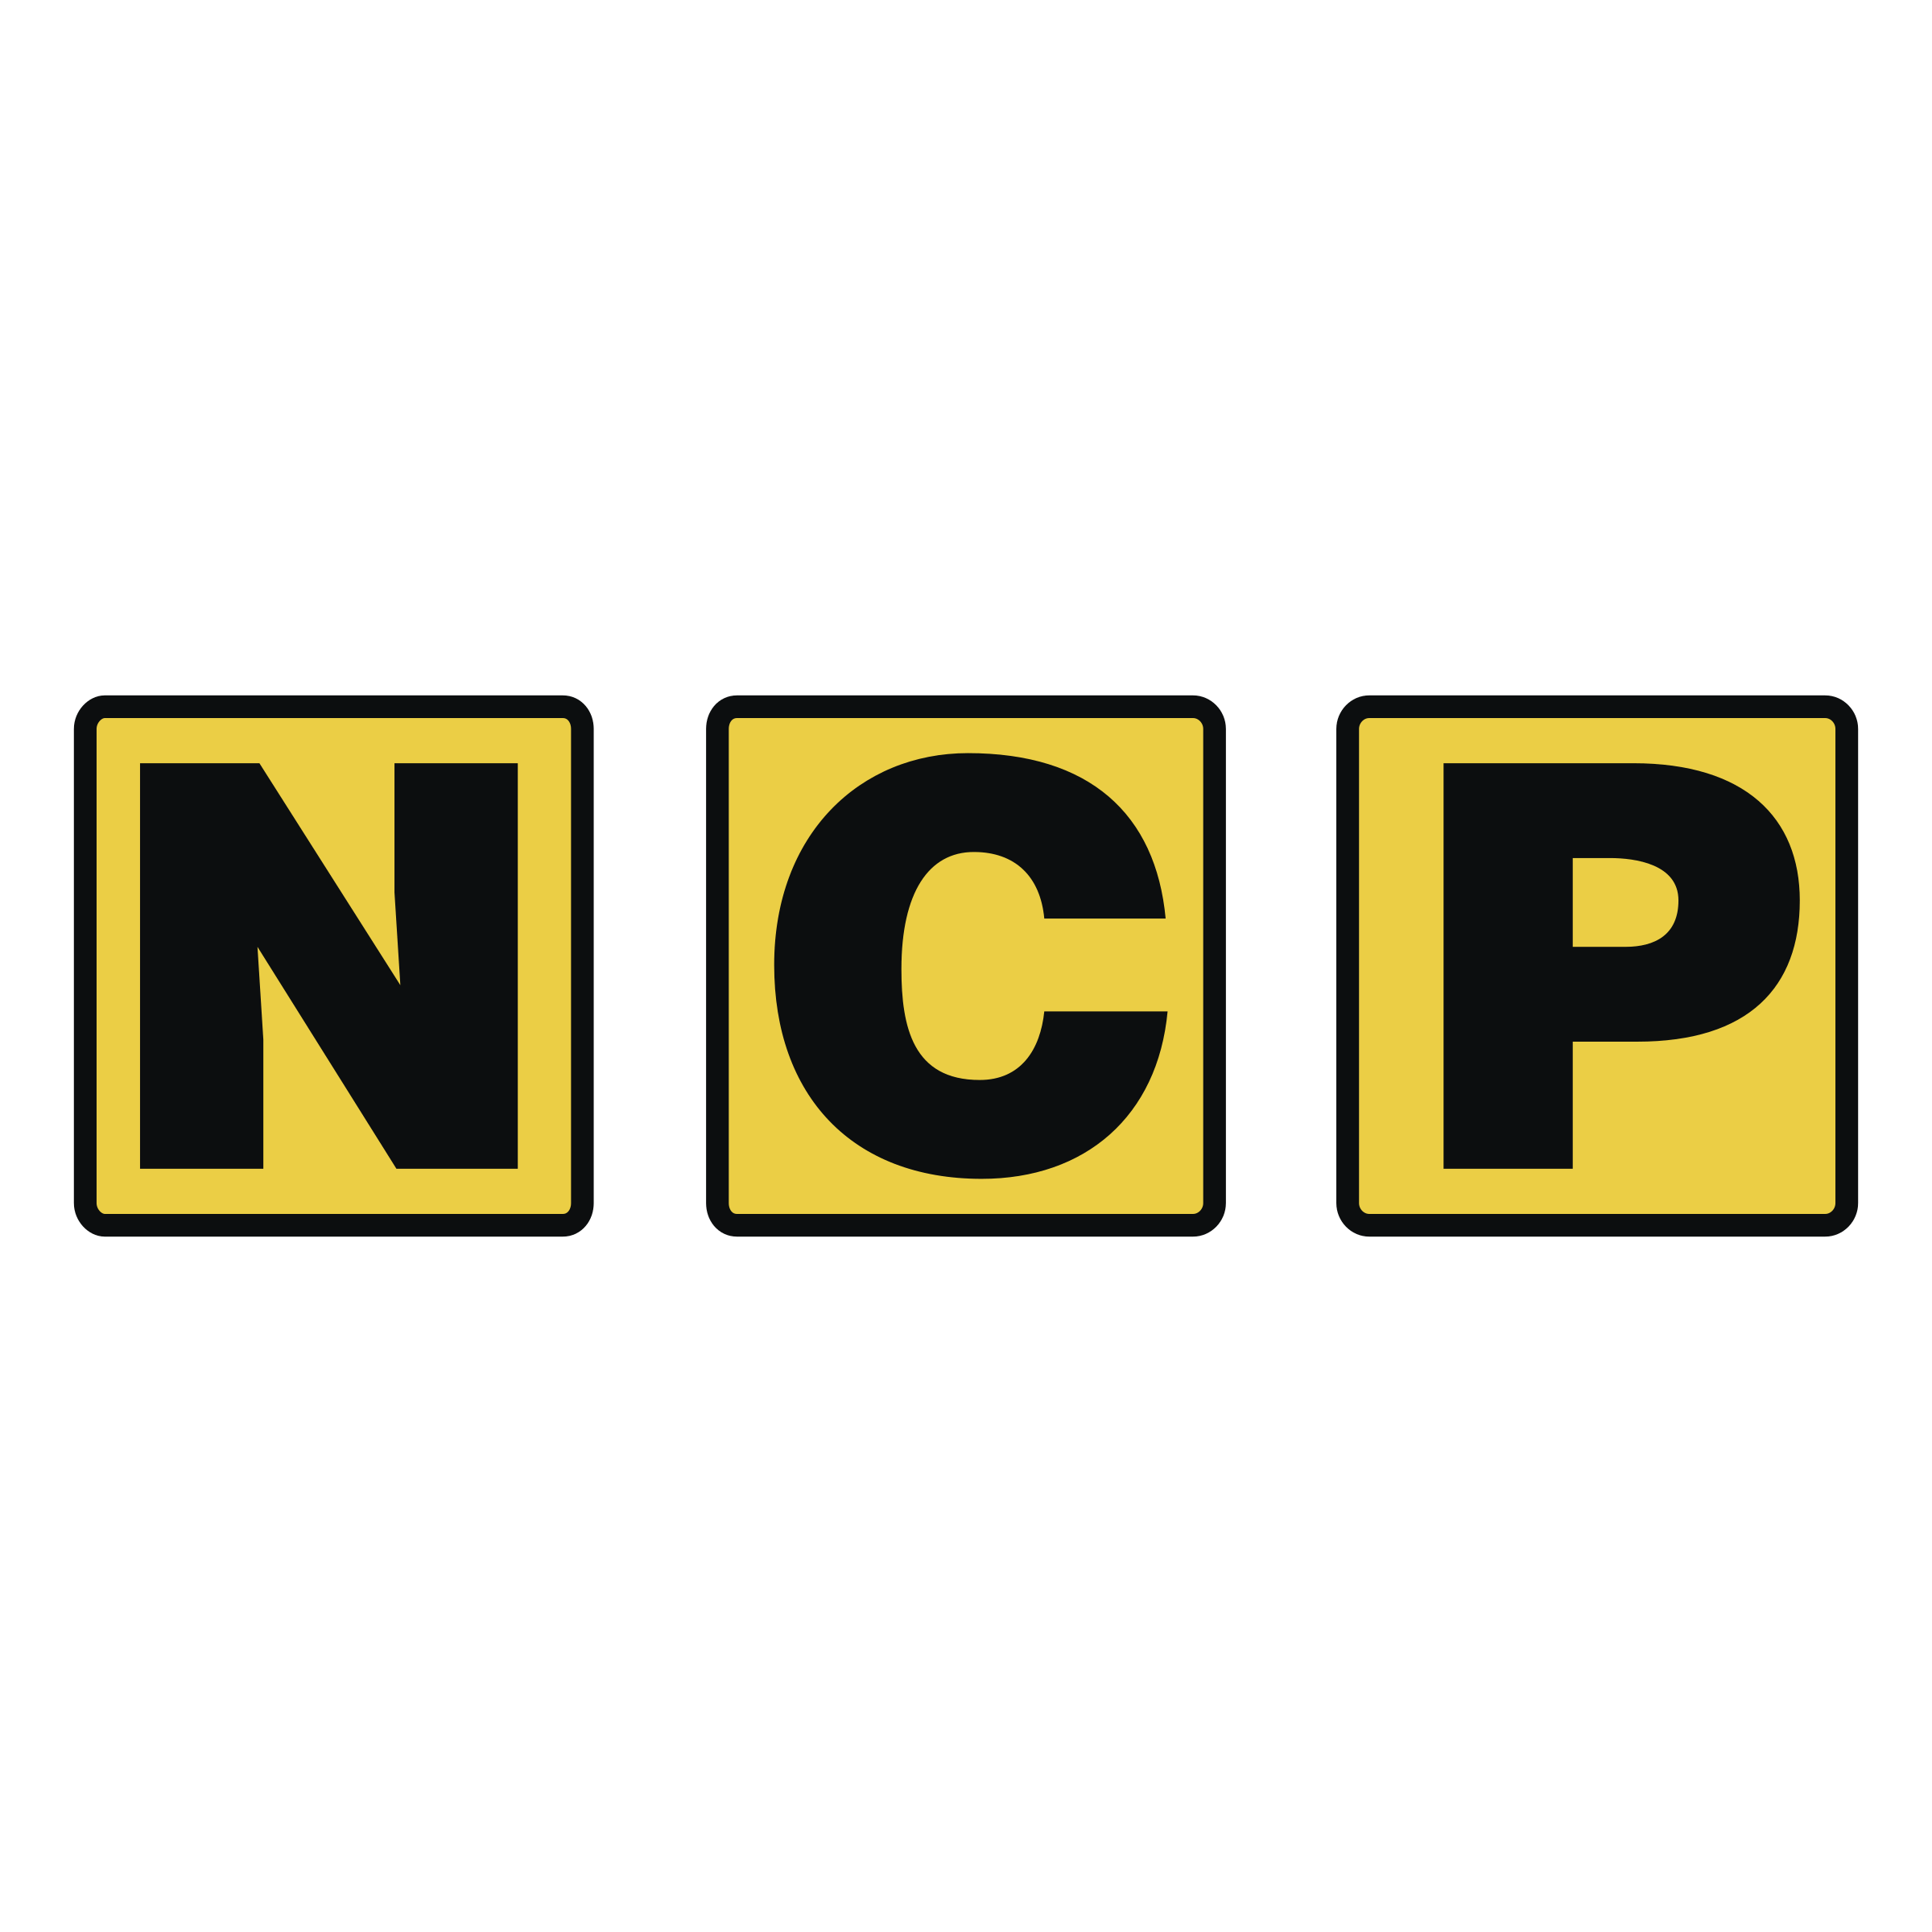 NCP Logo - NCP Logo PNG Transparent & SVG Vector - Freebie Supply